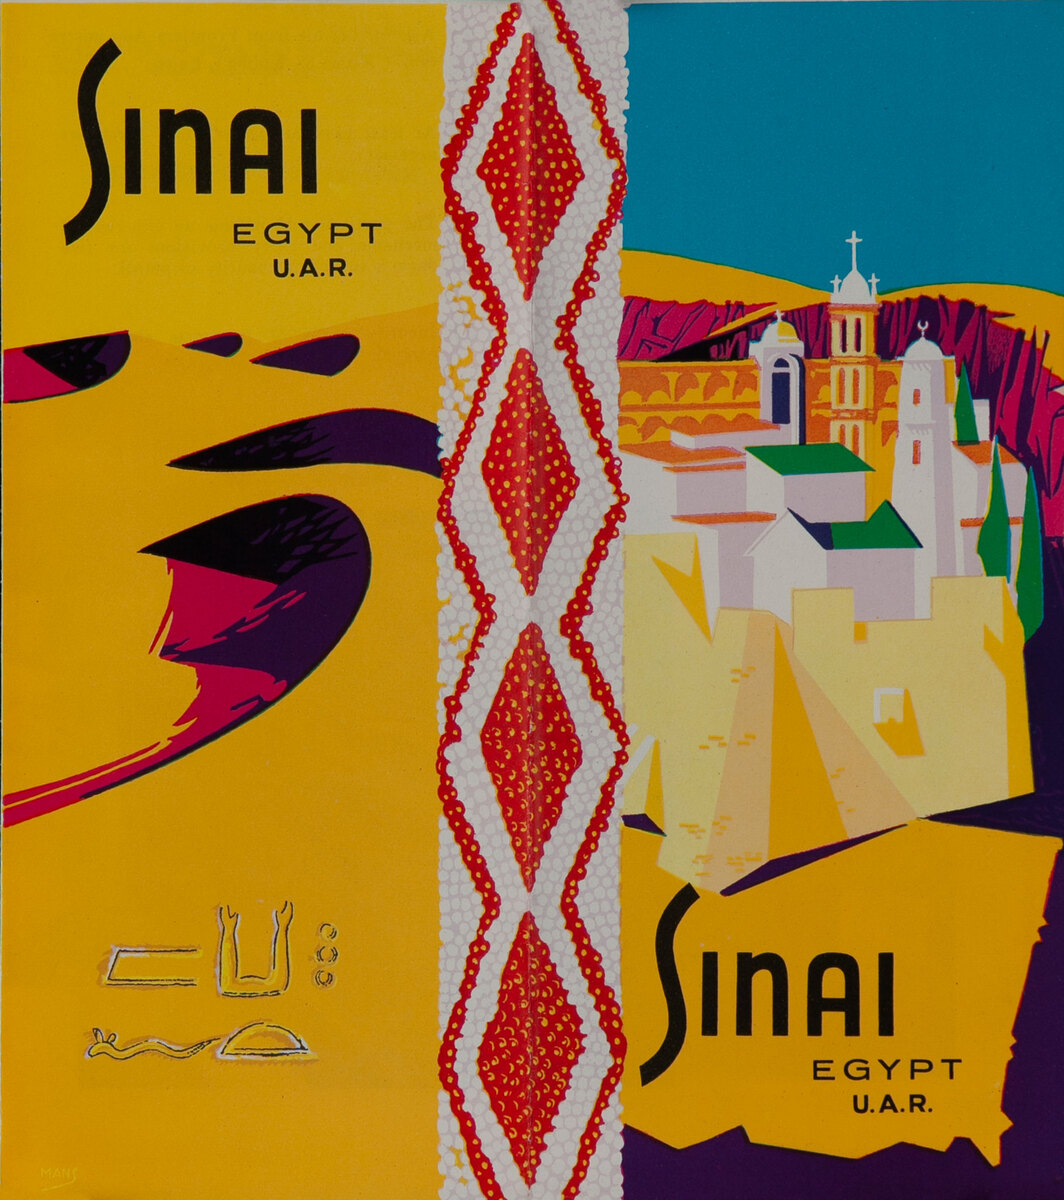 Sinai Egypt U.A.R Travel Brochure